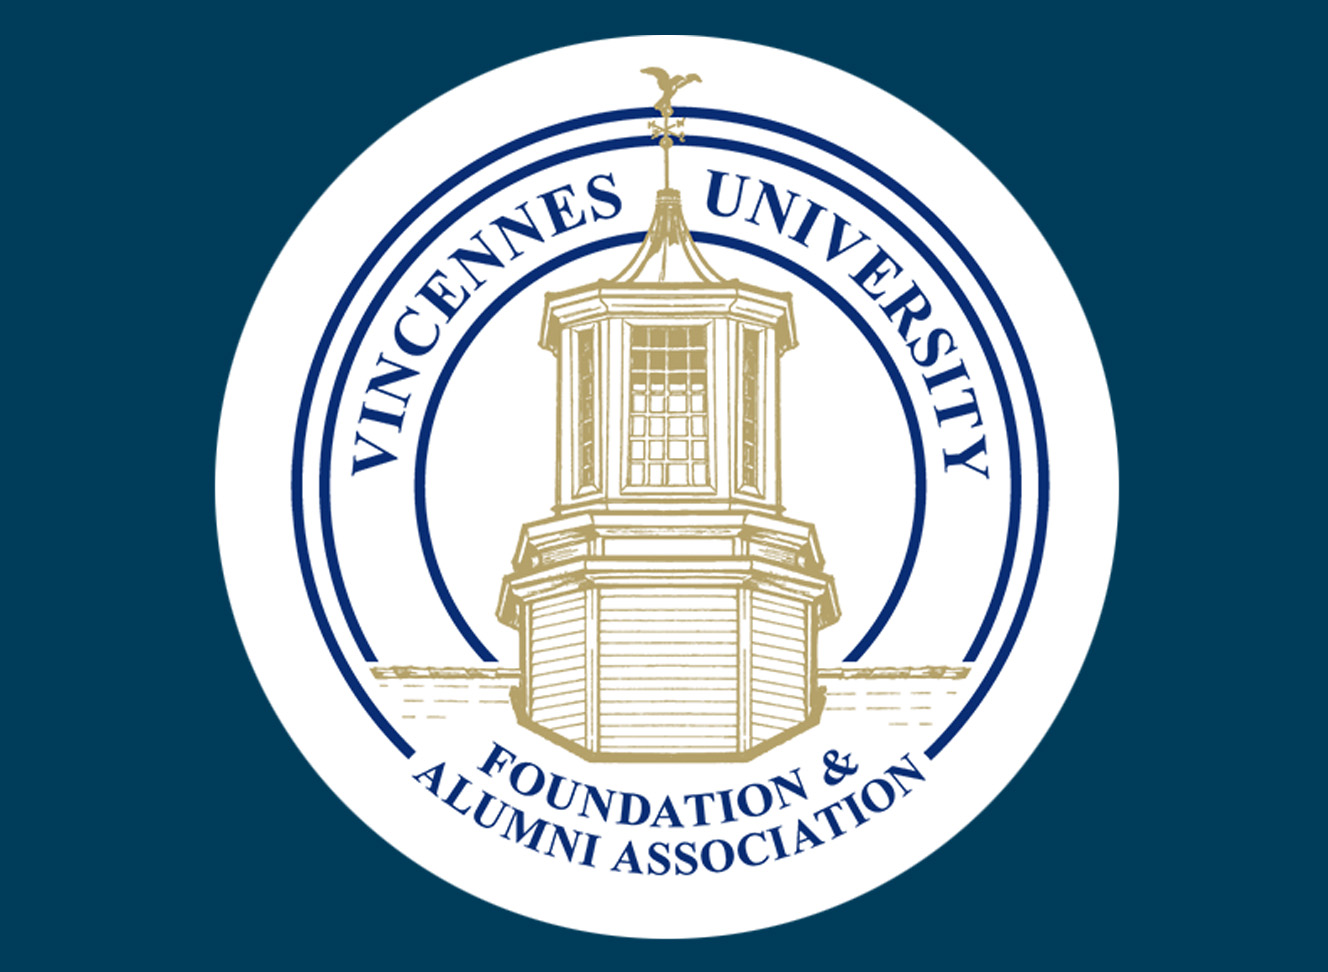 VU Foundation and Alumni Association seal